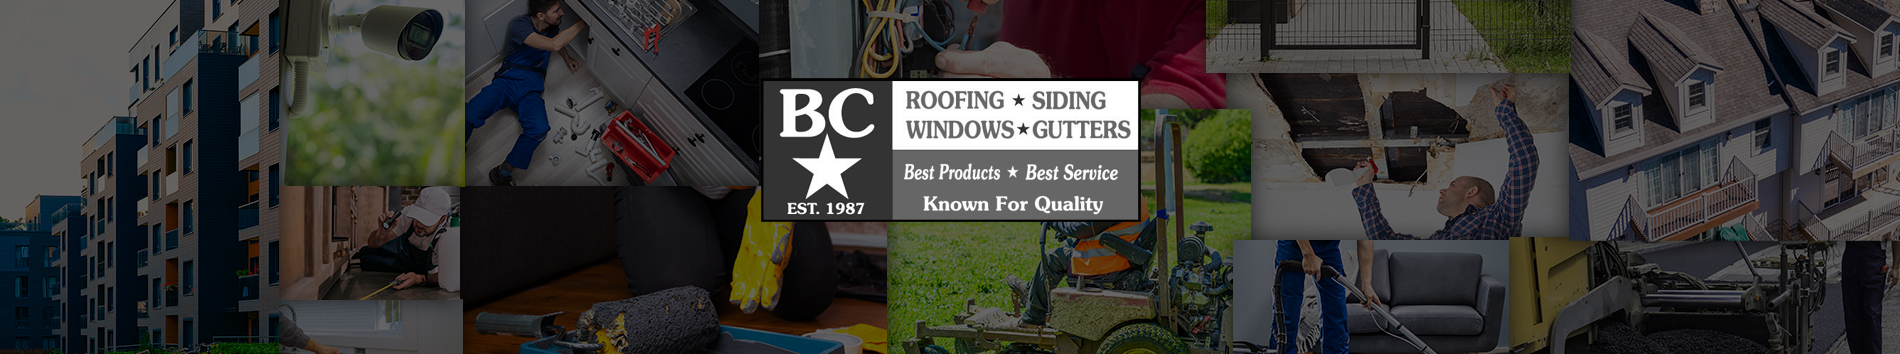 BC Roofing, Siding, & Windows